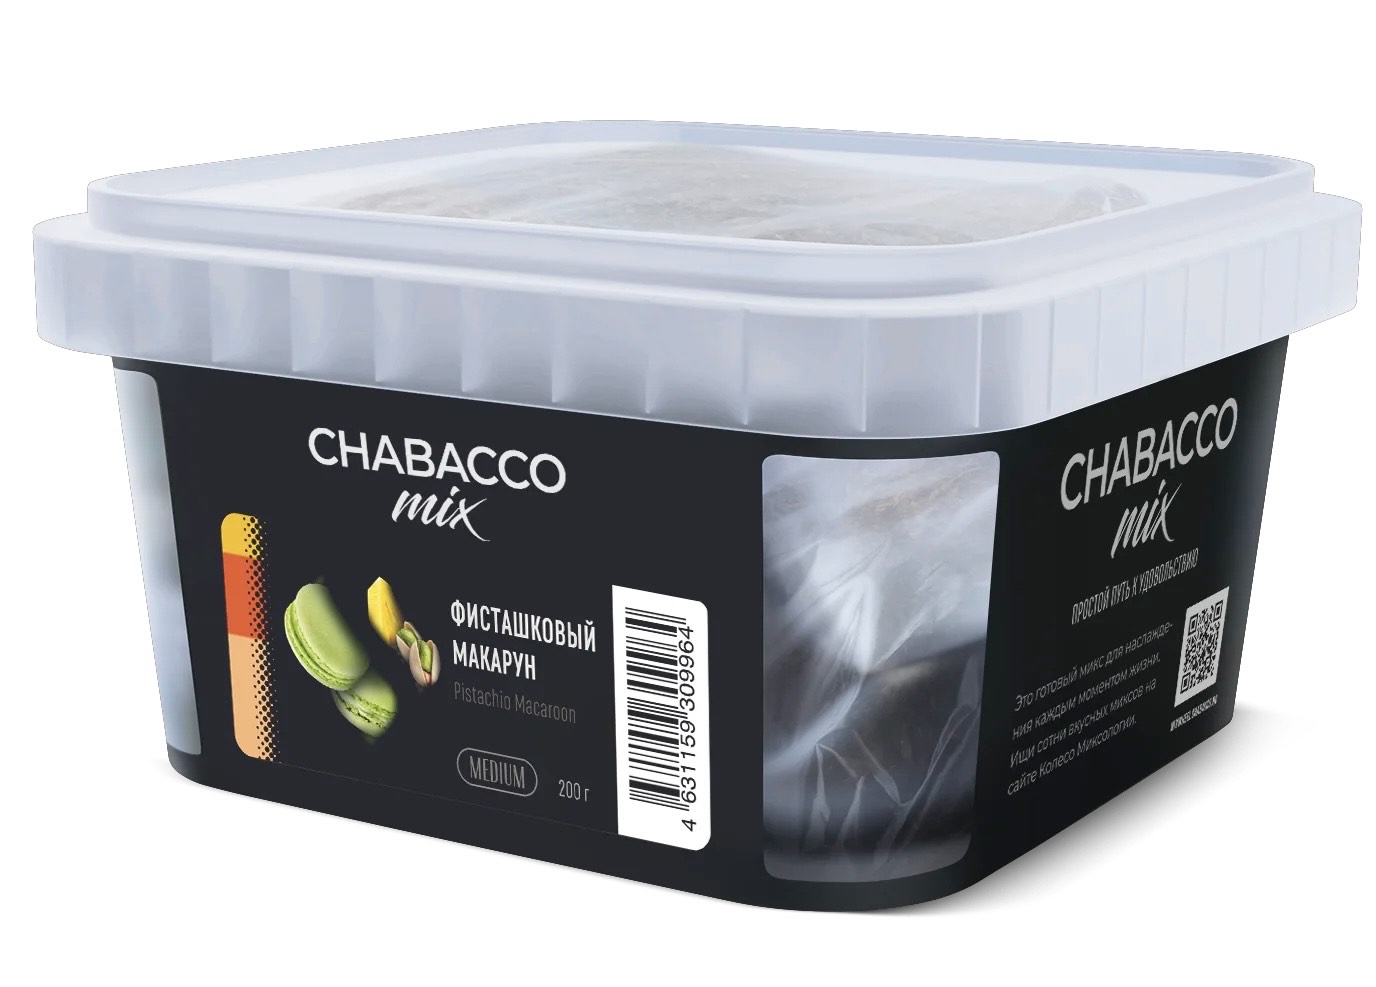 Chabacco - MIX - PISTACHIO MACAROON - 200 g